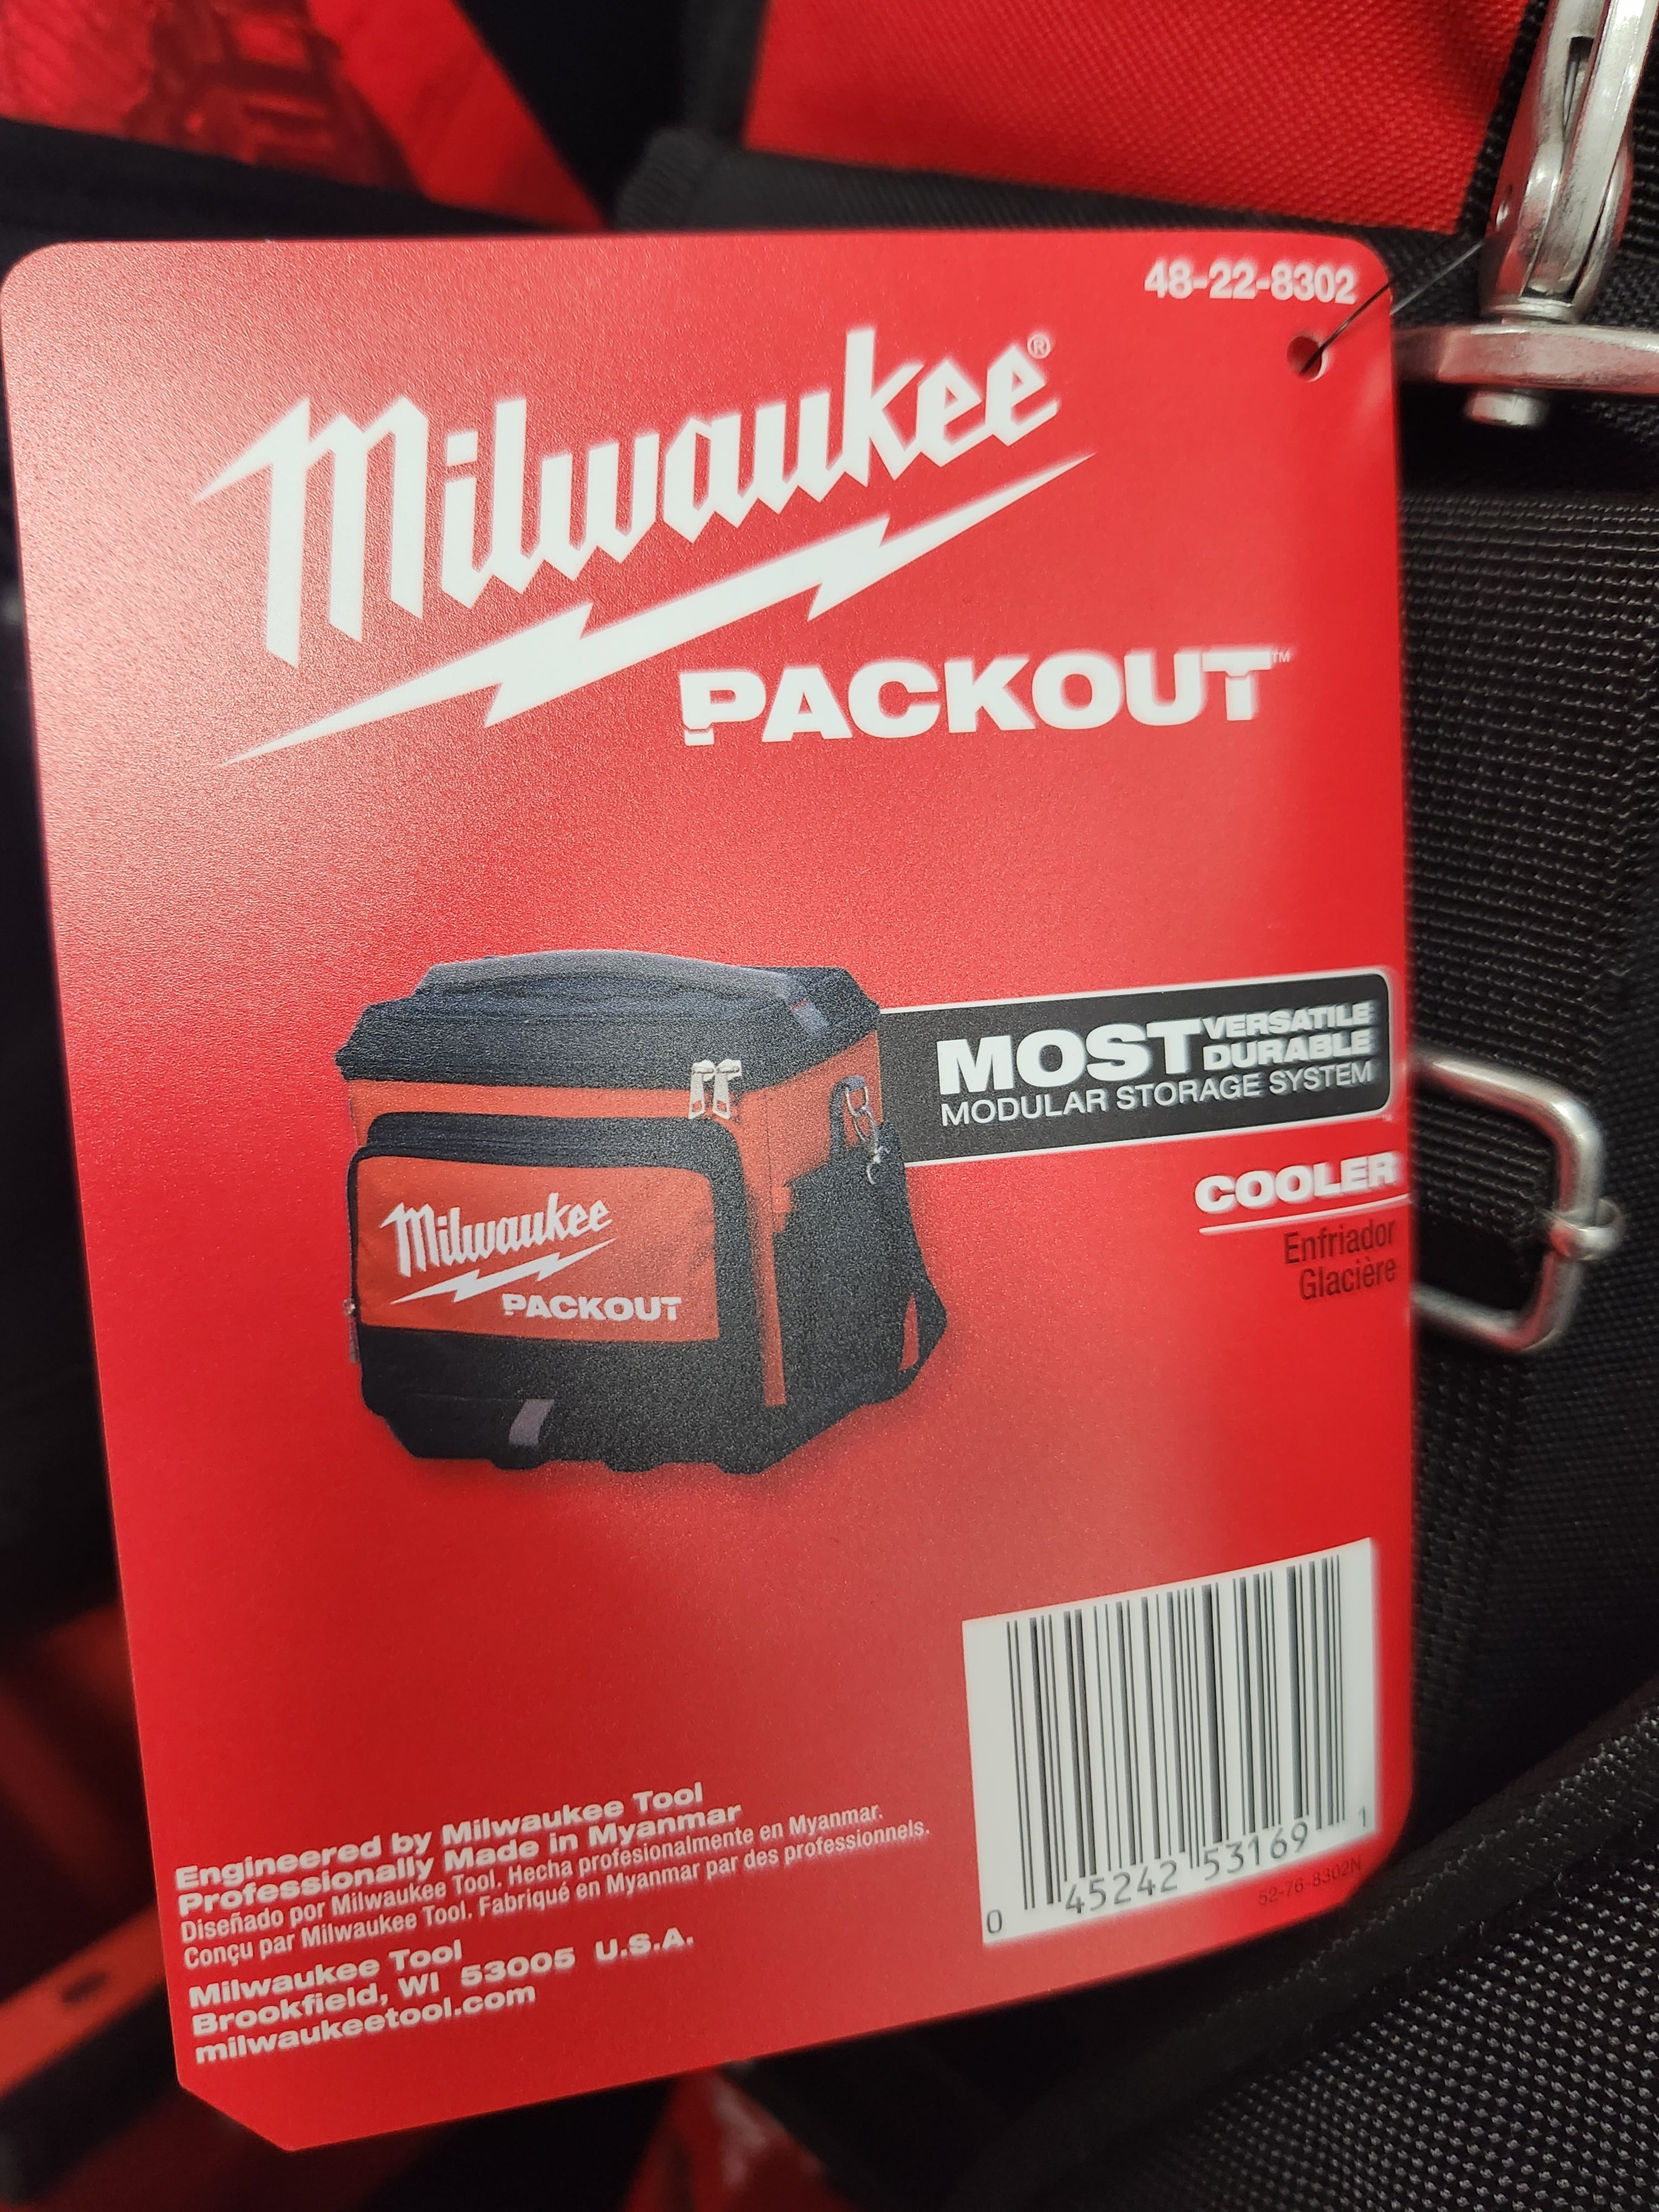 Milwaukee PACKOUT™ Cooler 48-22-8302